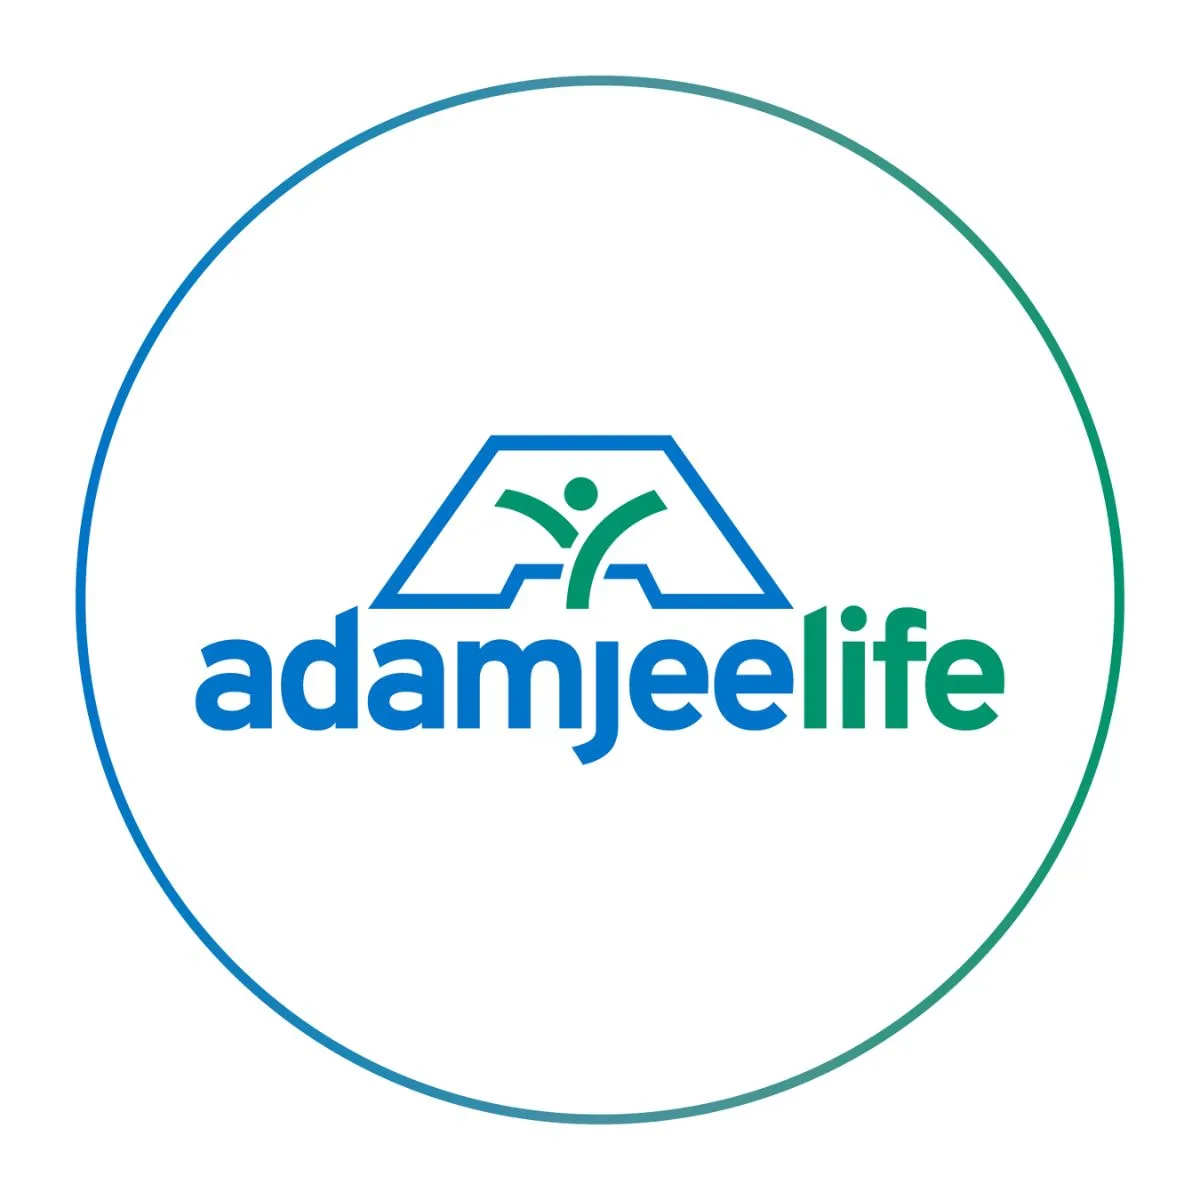 Adamjee Life Assurance Company Limited